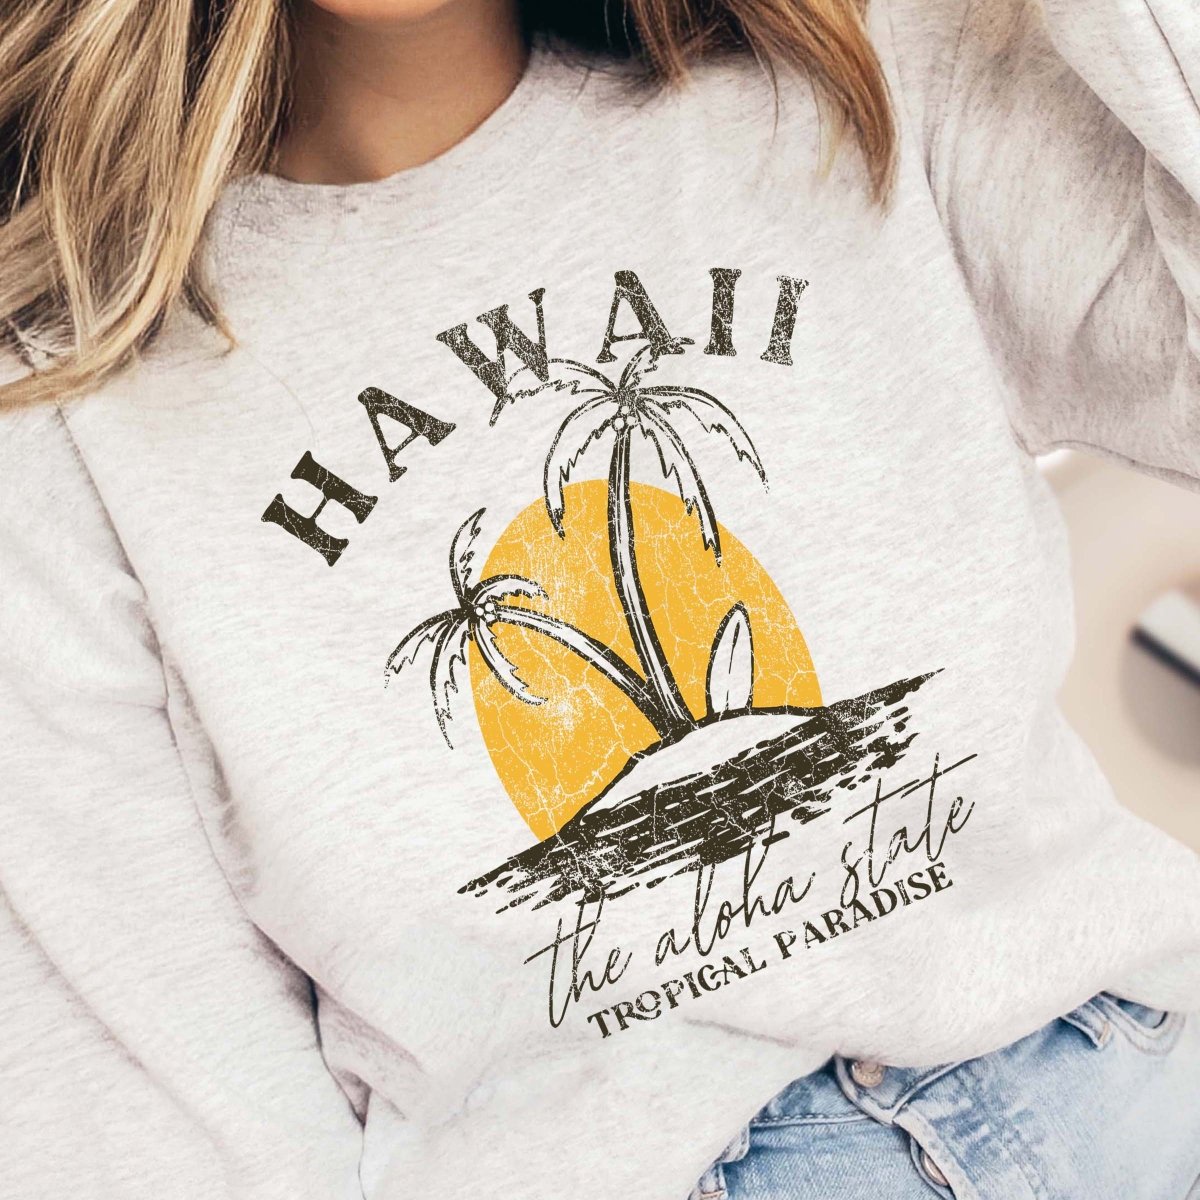 Hawaii Tropical Paradise Sweatshirt - Limeberry Designs